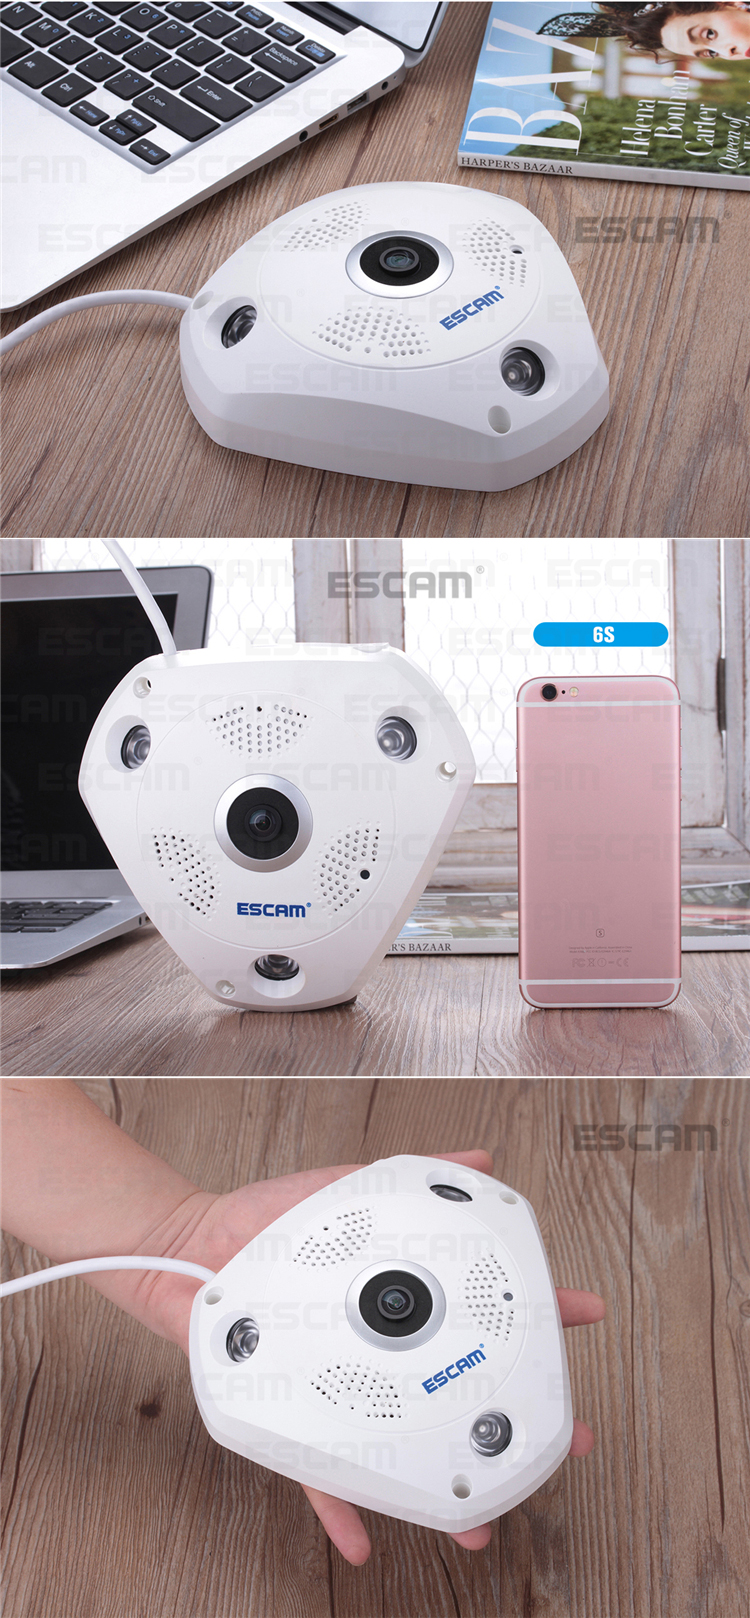 ESCAM Fisheye Camera Support VR QP180 Shark 960P IP WiFi Camera 1.3MP 360 Degree Panoramic Infrared Night Vision Camera 21